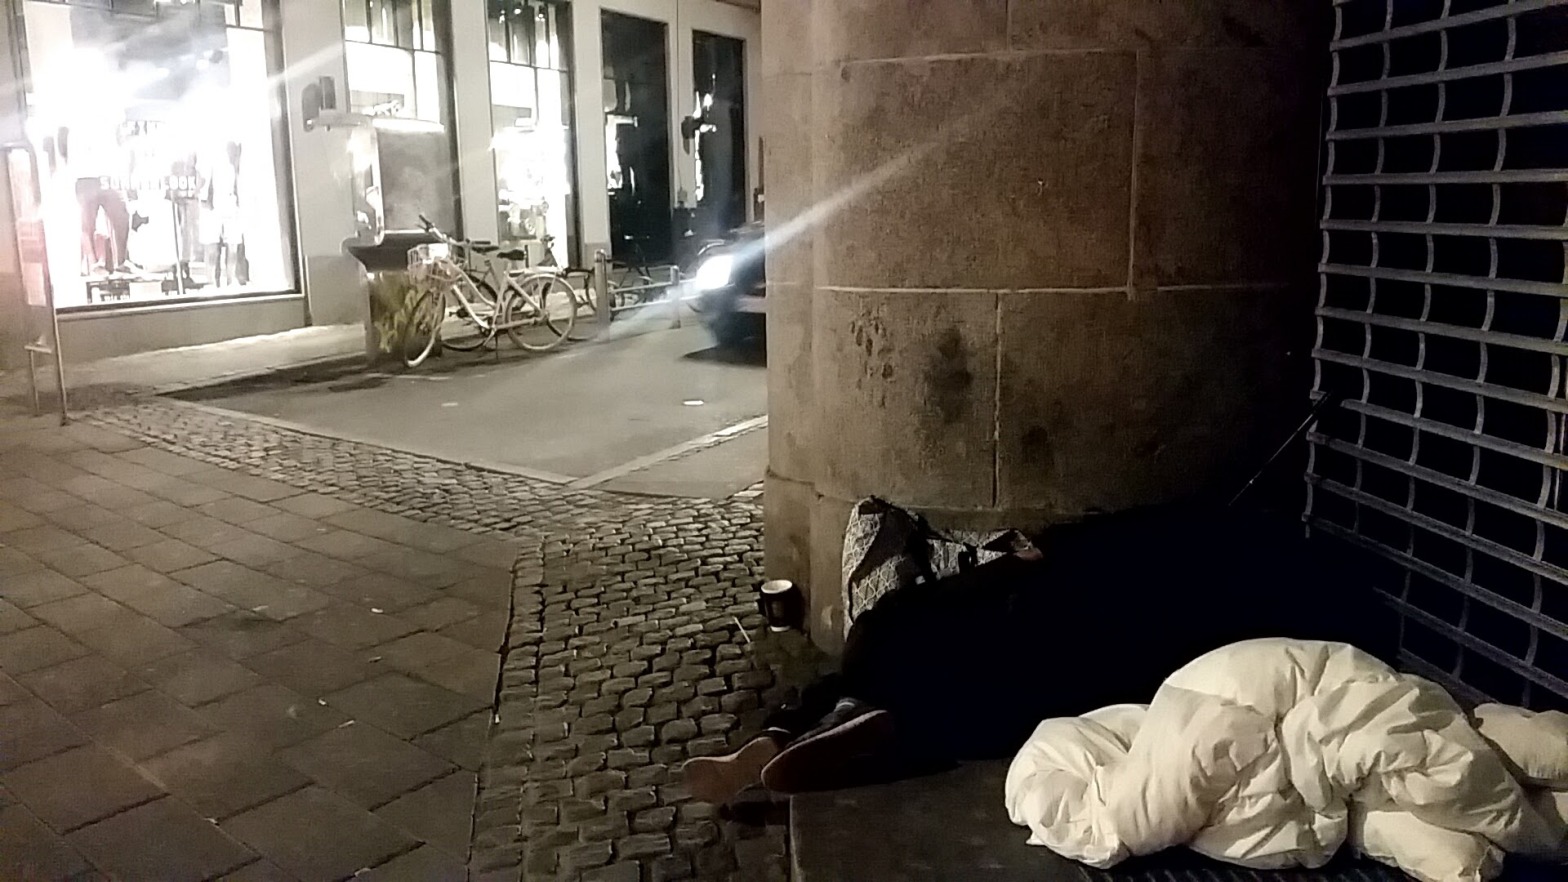 Homeless sleeping in a corner of the street